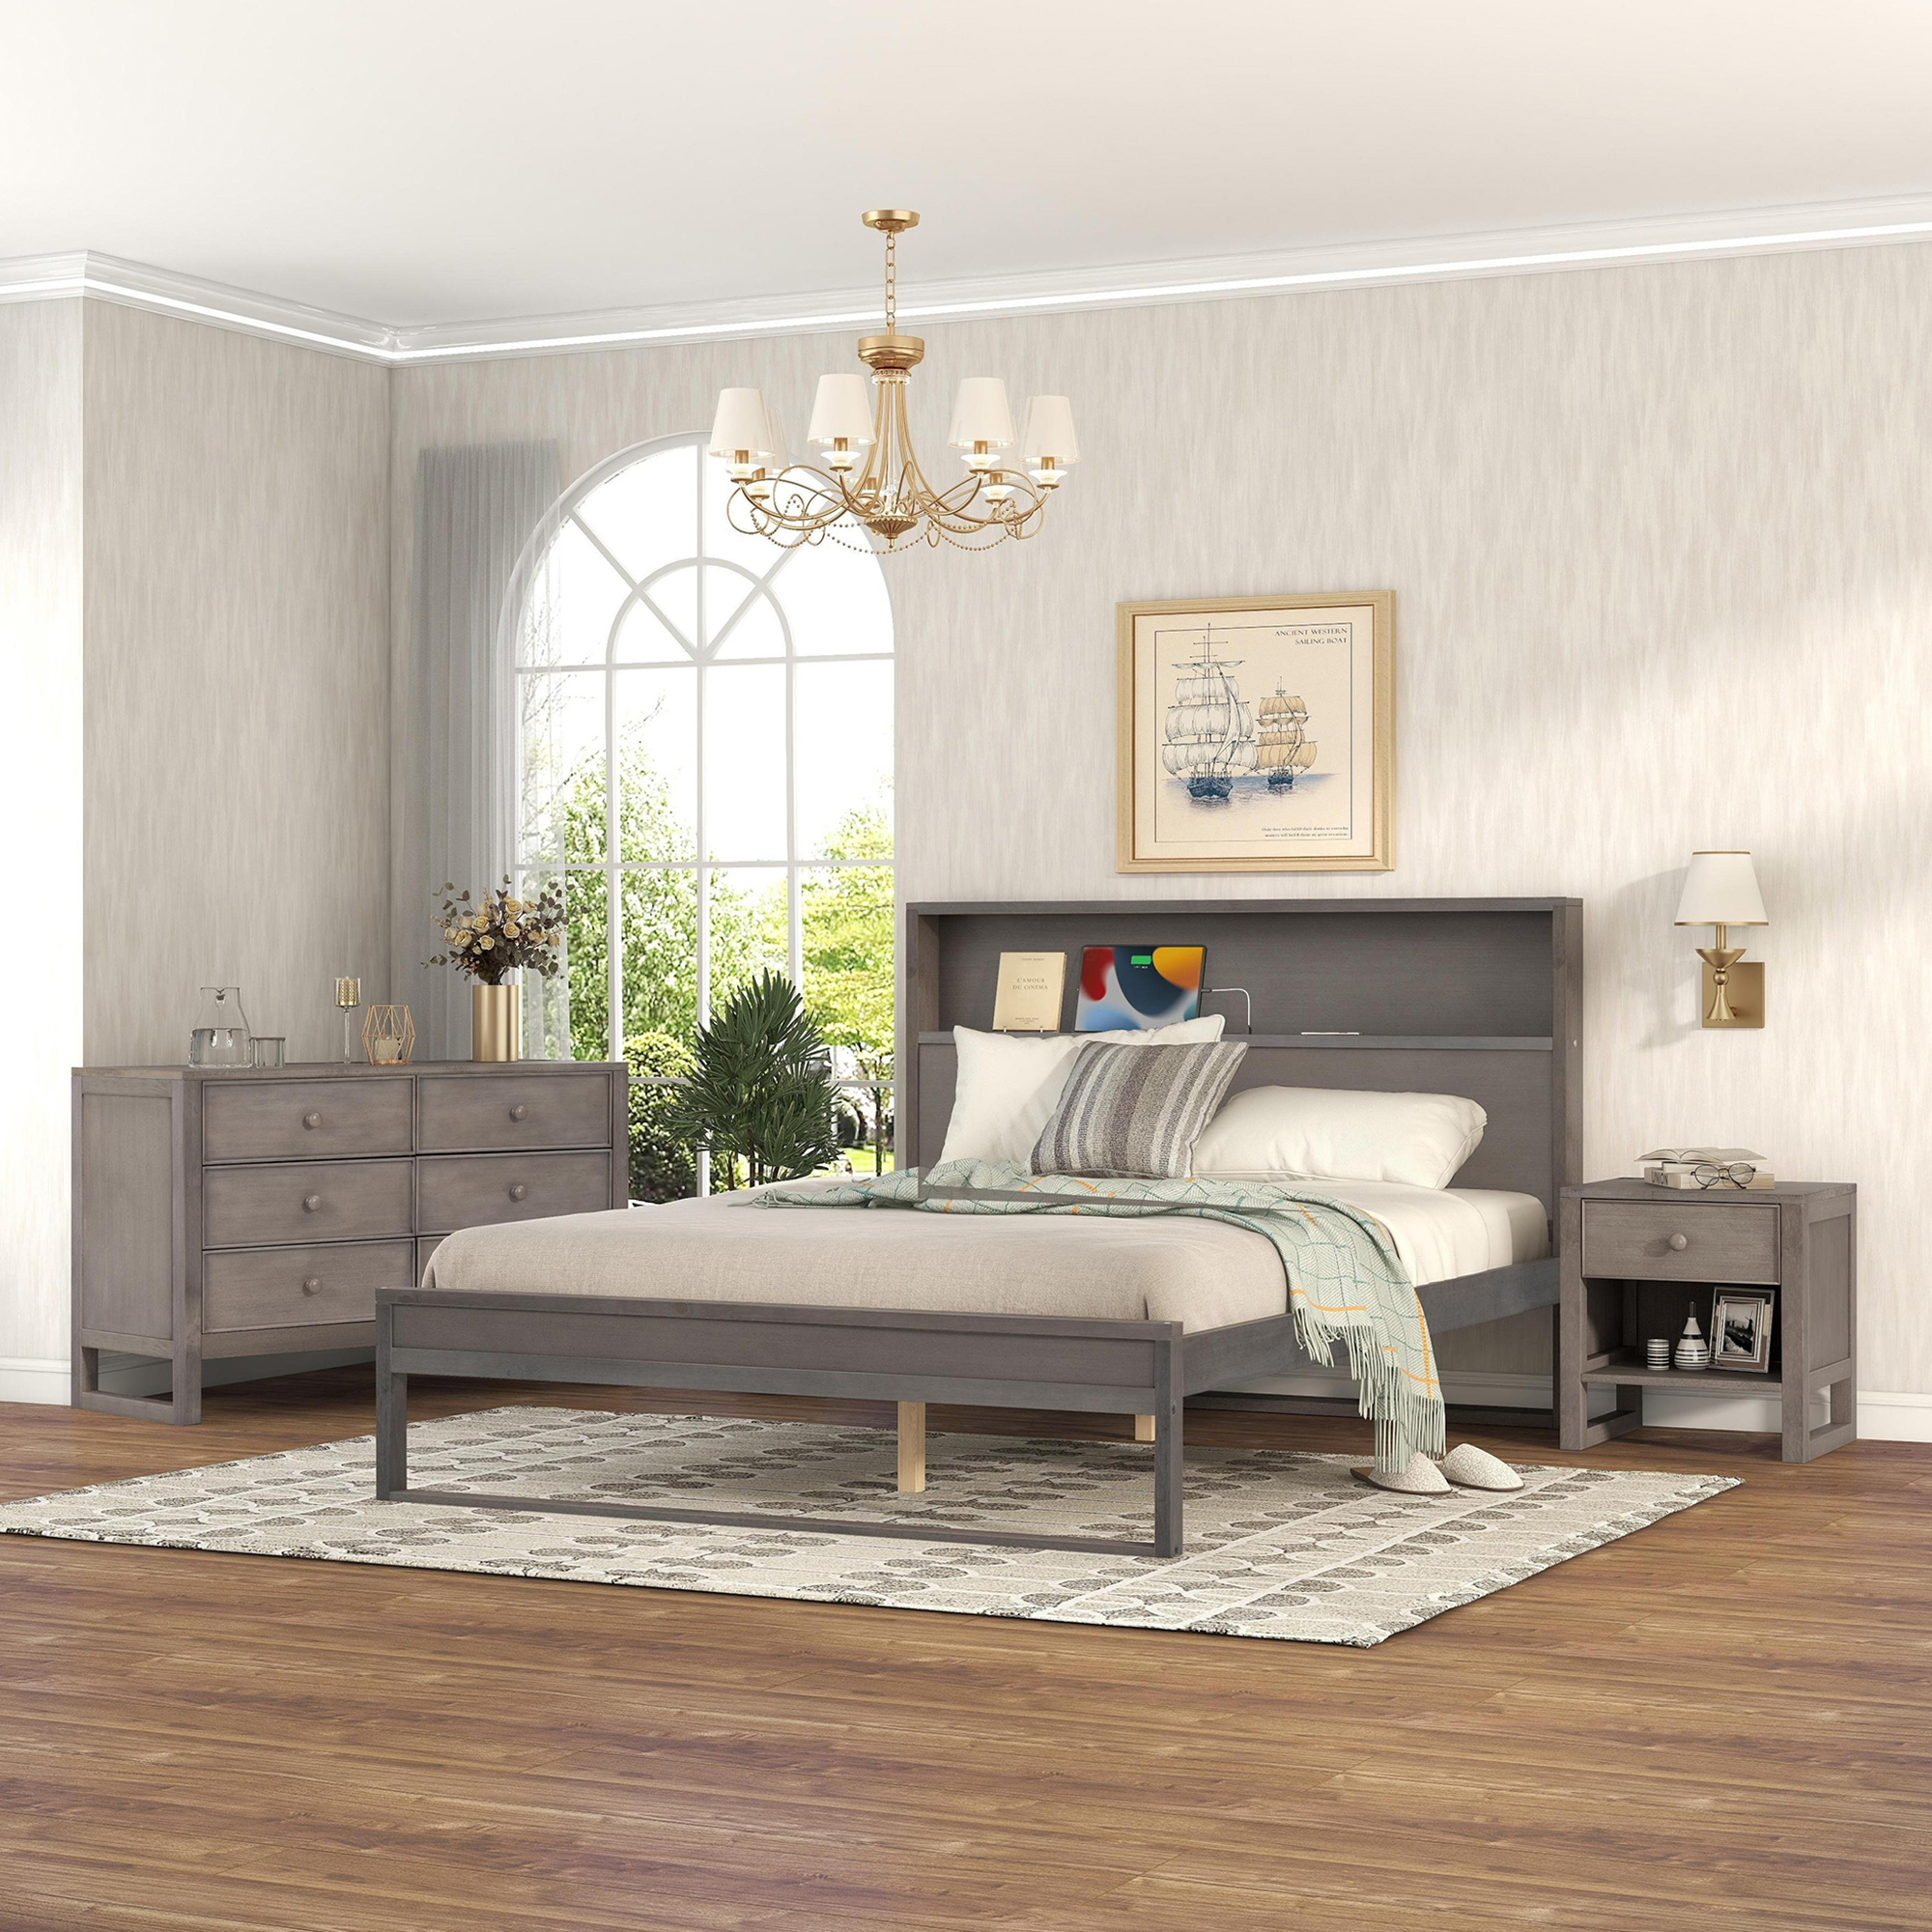 3-Pieces Bedroom Sets, Queen Size Platform Bed - HL000003AAG